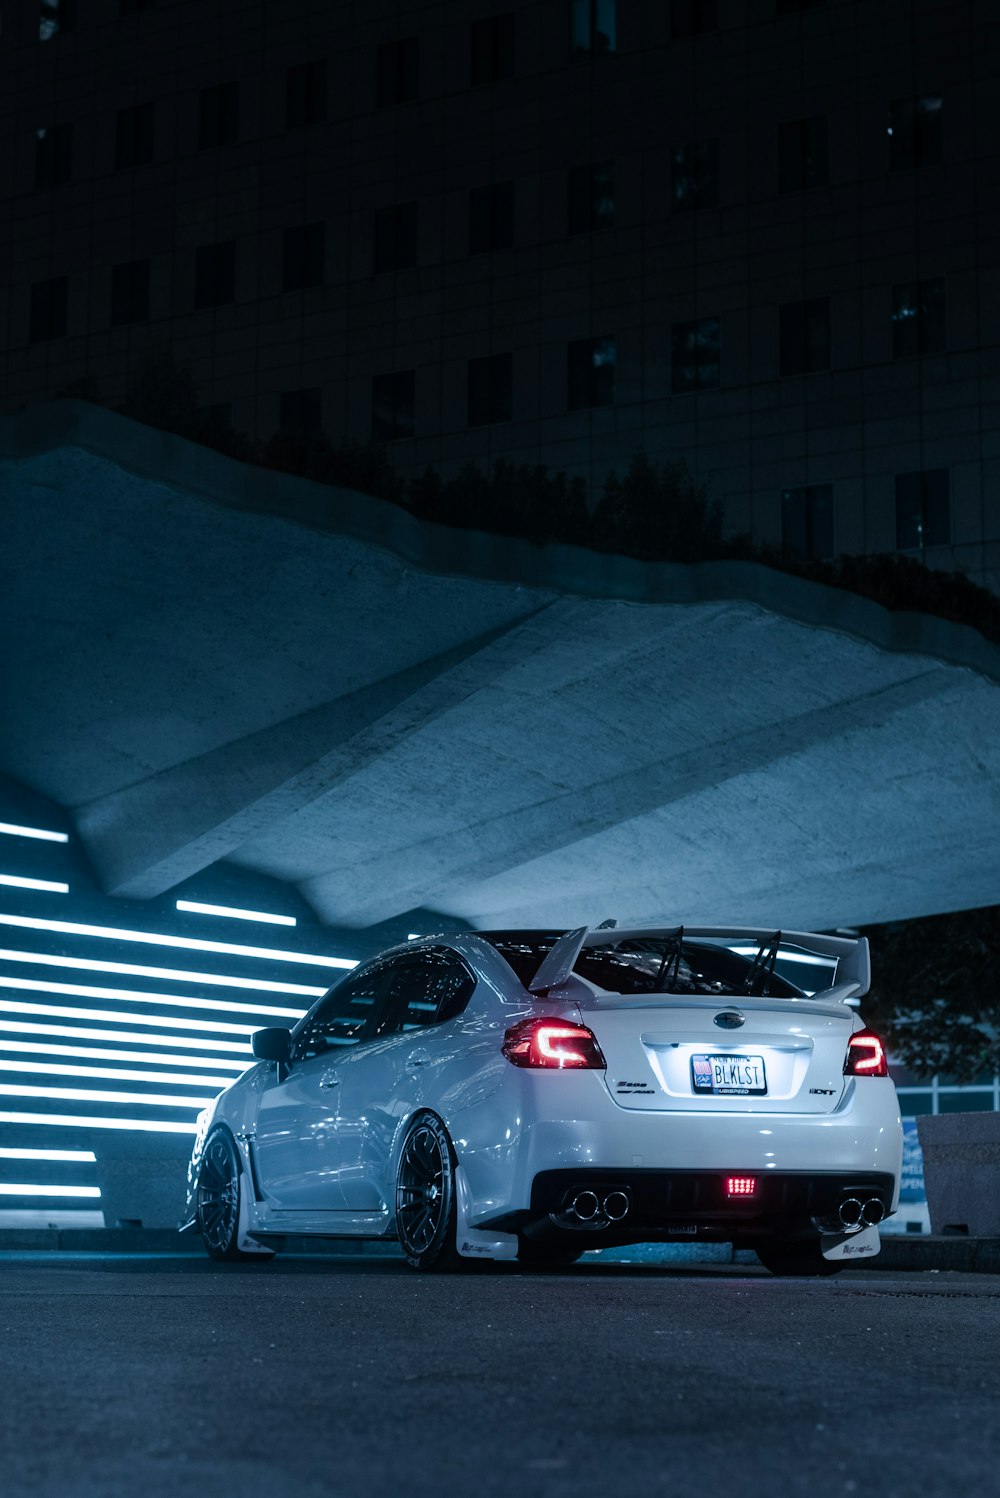 Subaru Wrx Pictures | Download Free Images on Unsplash